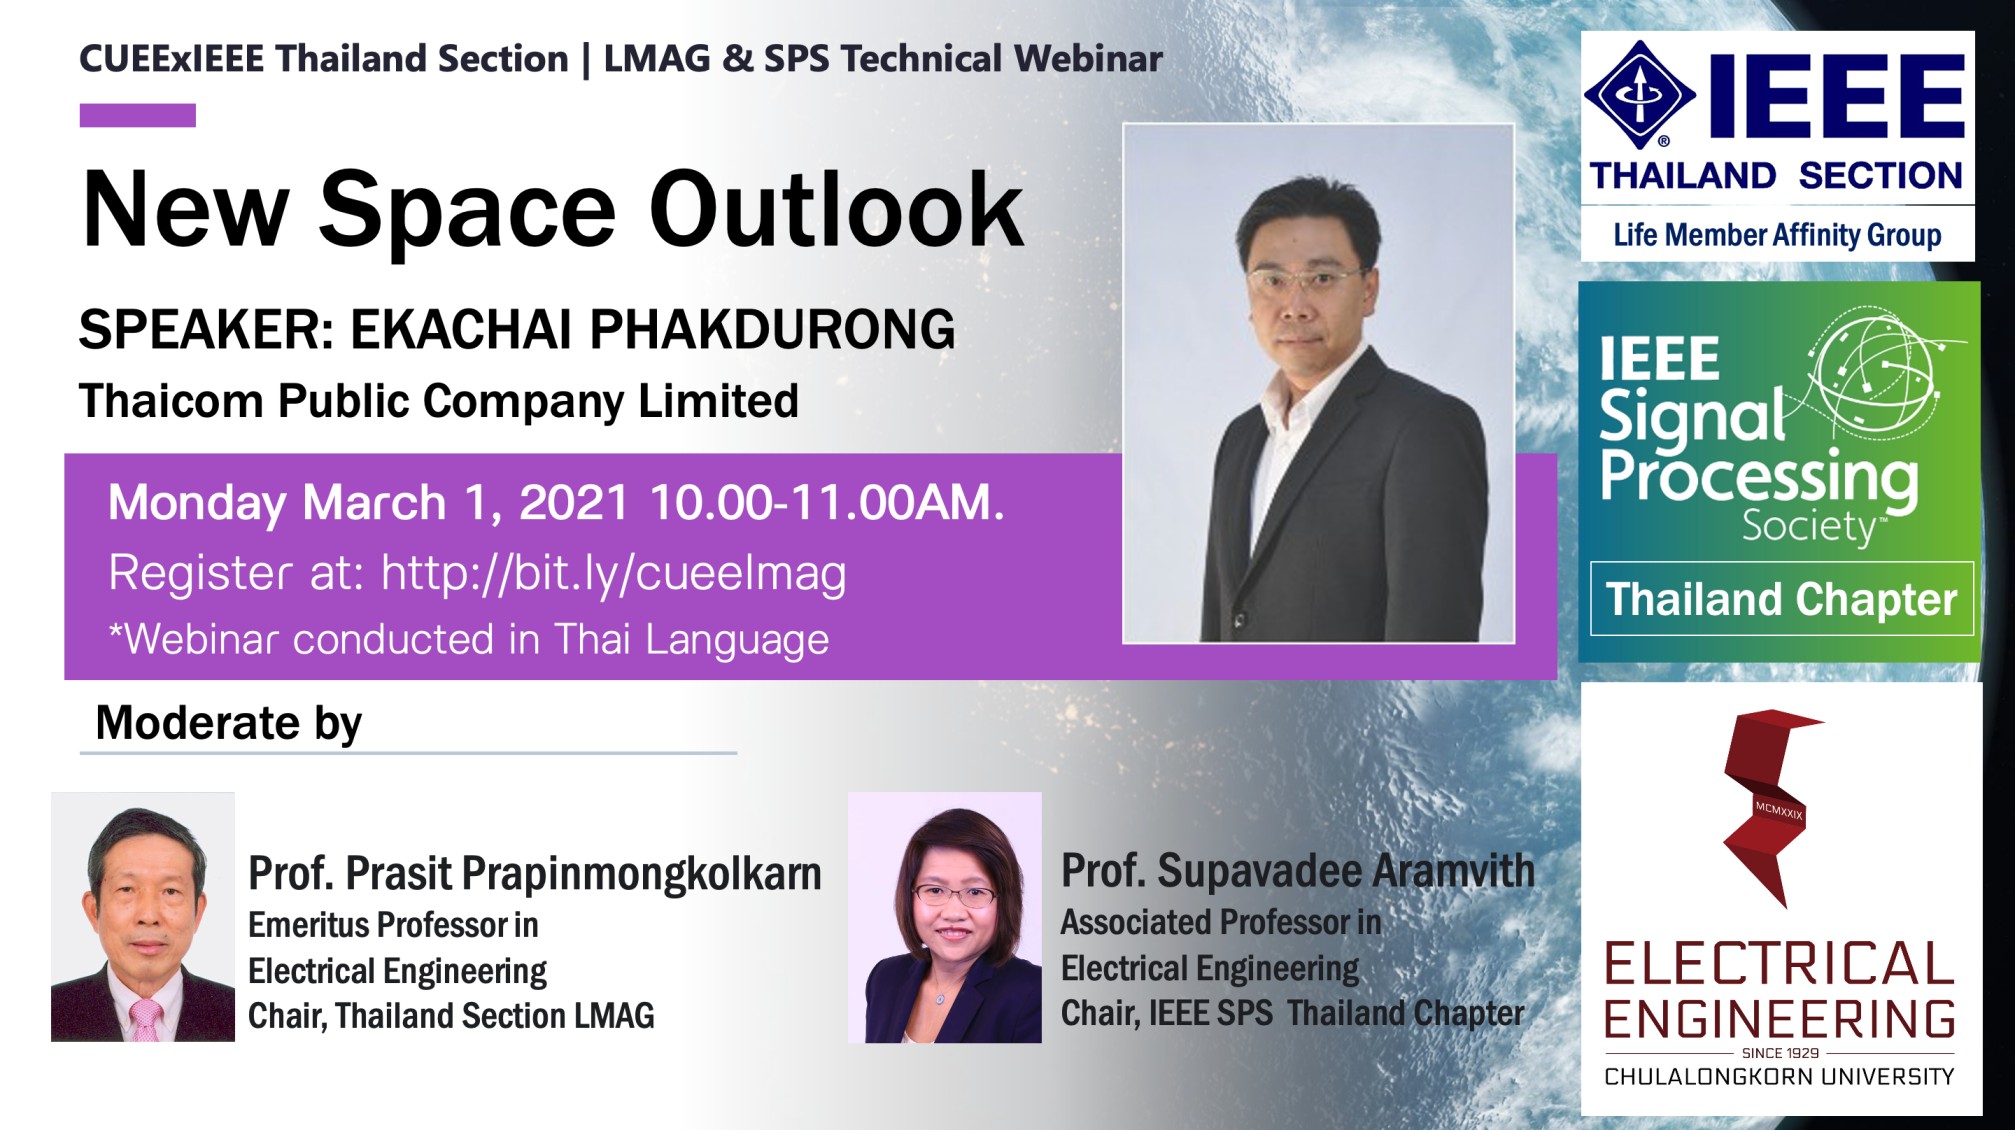 Webinar “New Space Outlook,” by Mr. Ekachai Phakdurong, Senior Vice President and Head of Regulatory Affairs, Thaicom Public Company Limited.